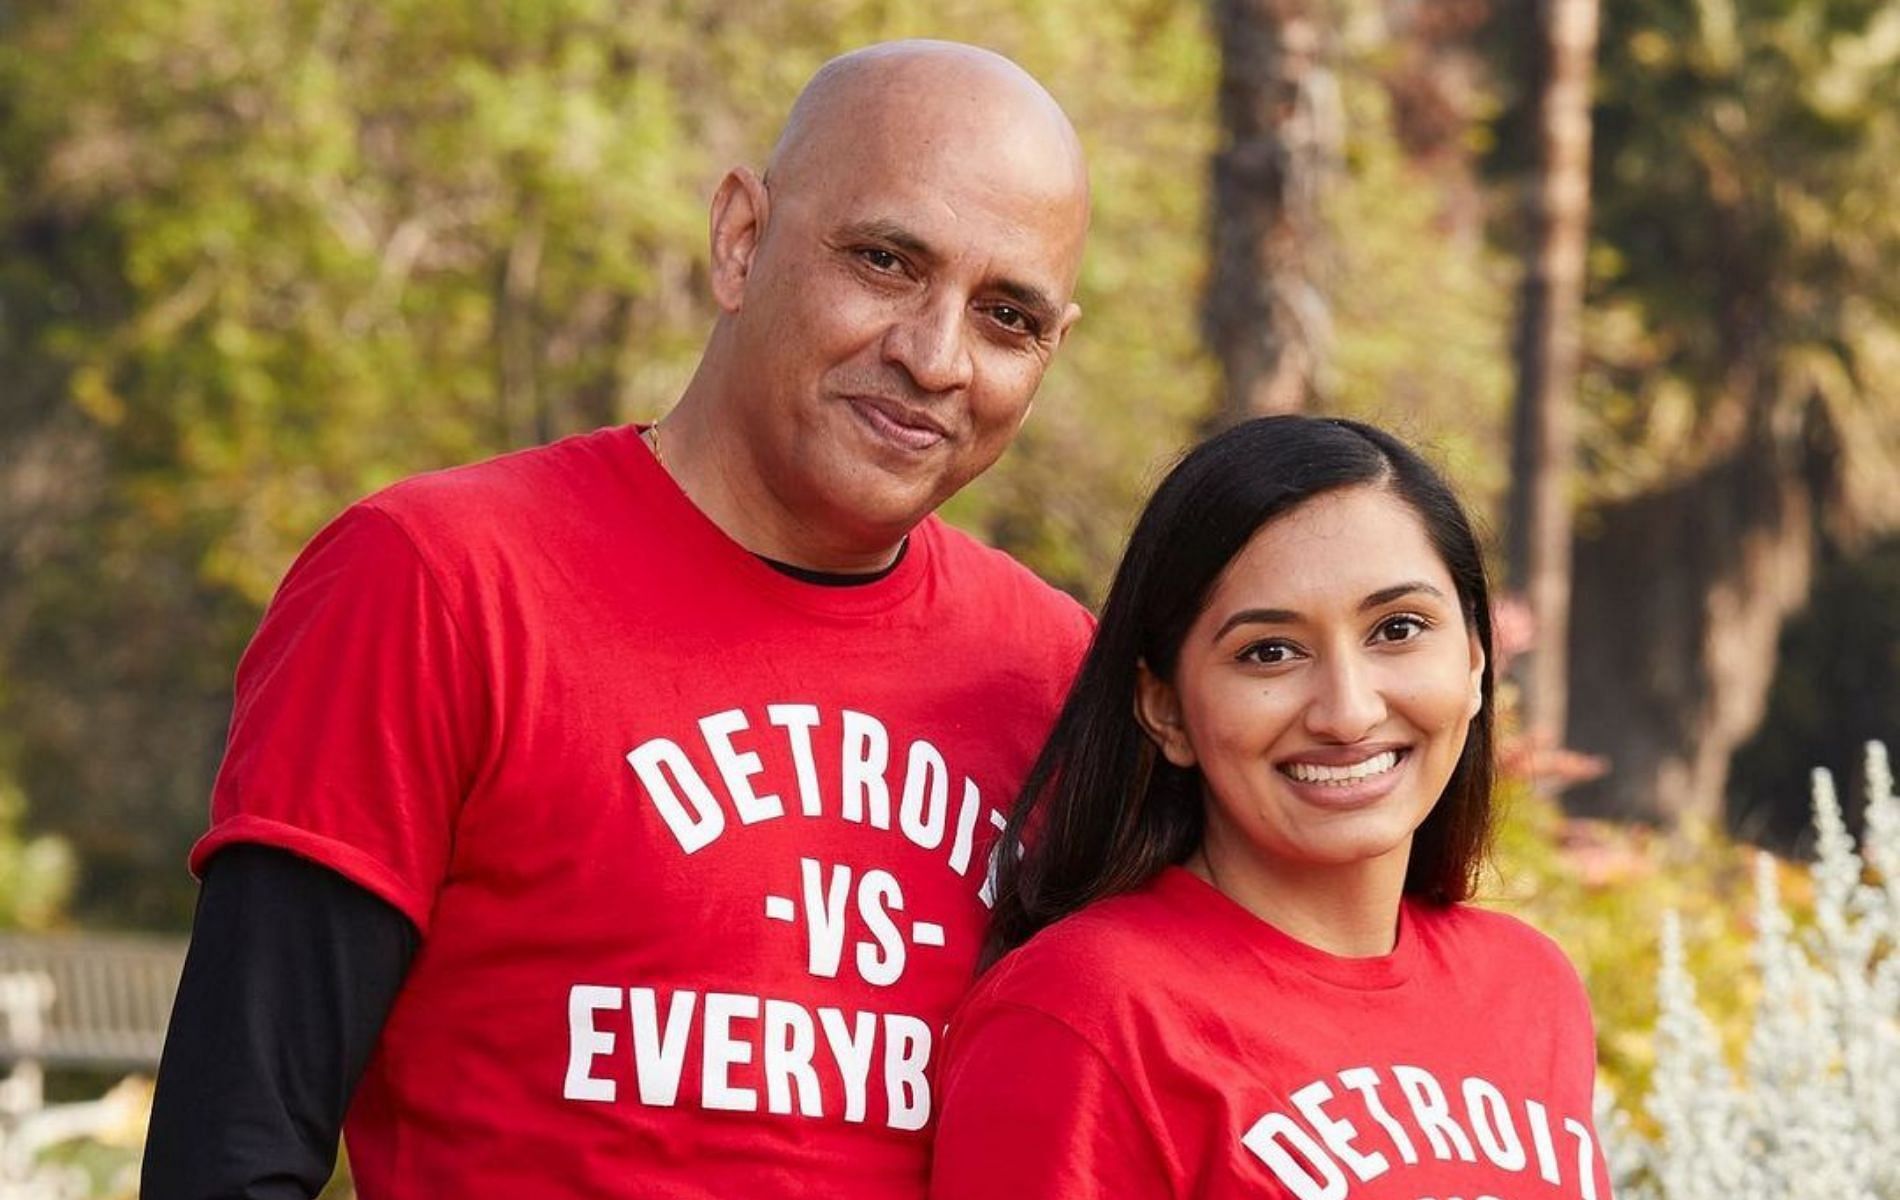 Father Arun Kumar and daughter Natalia Kumar from The Amazing Race (Image via nataliakumar/Instagram)